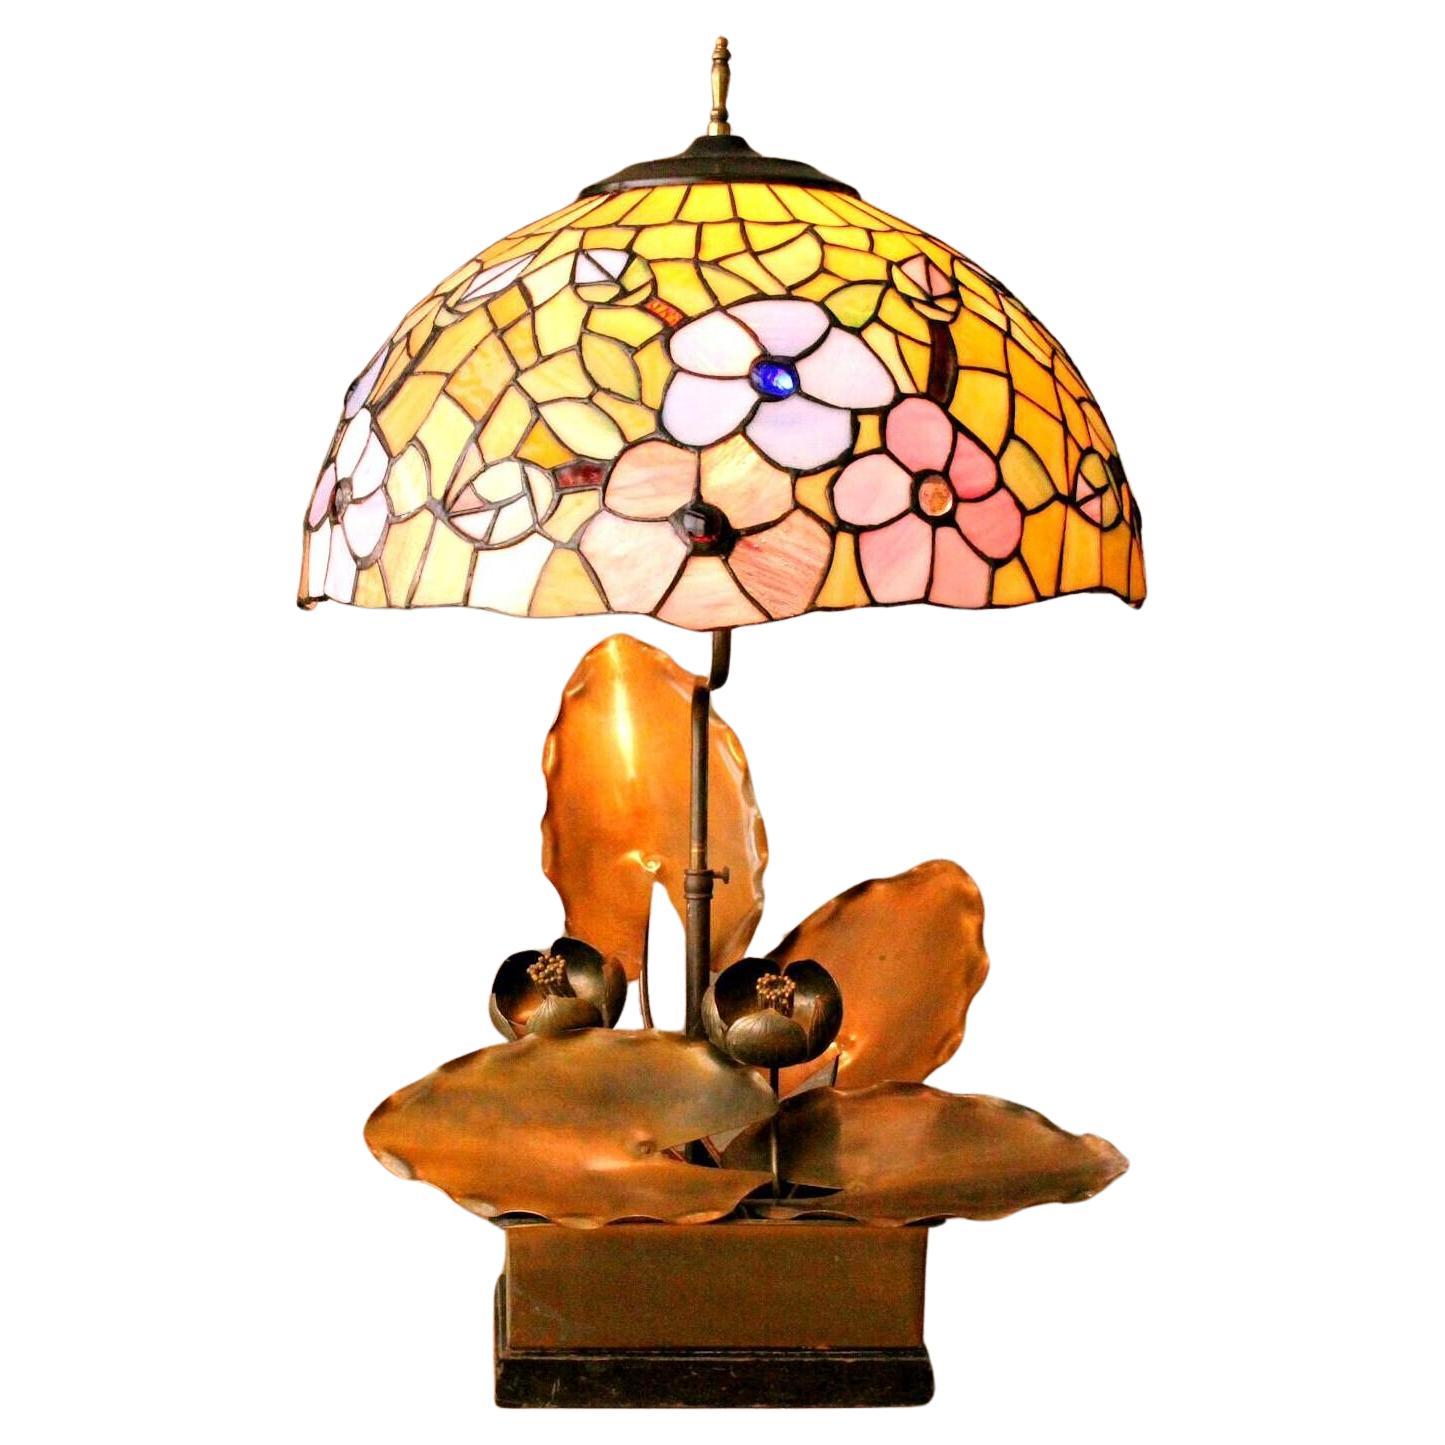 Magificent 1920s Art Nouveau Metal Sculptural Lotus Lamp. Camed Art Glass